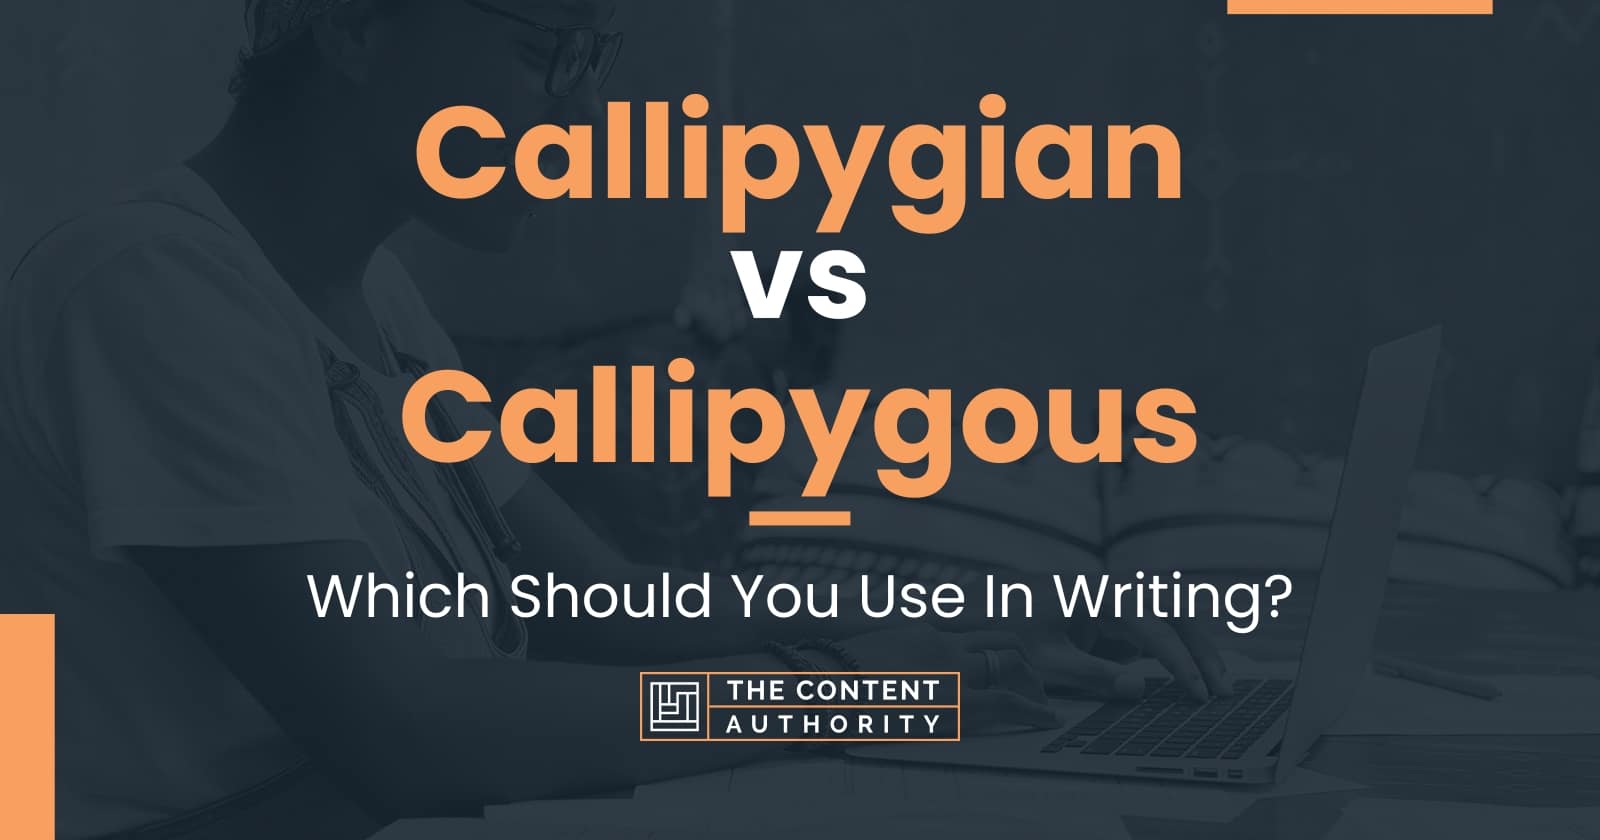 Callipygous- Having well-shaped buttocksgotta remember this word:-)